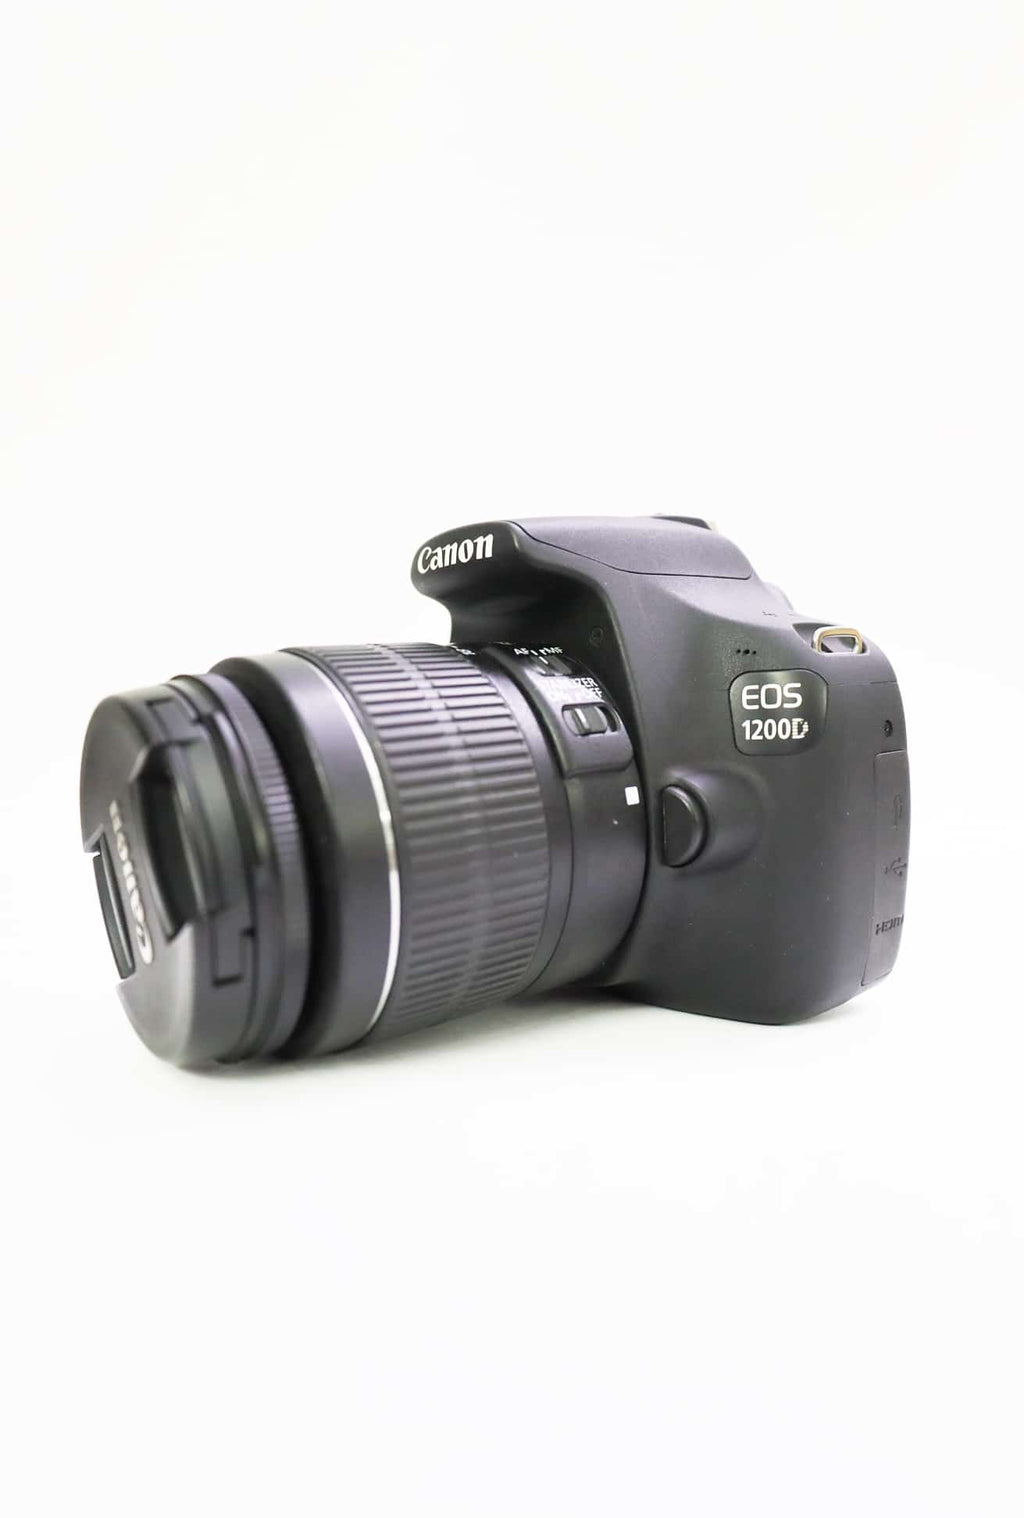 Used Canon 1200D Camera